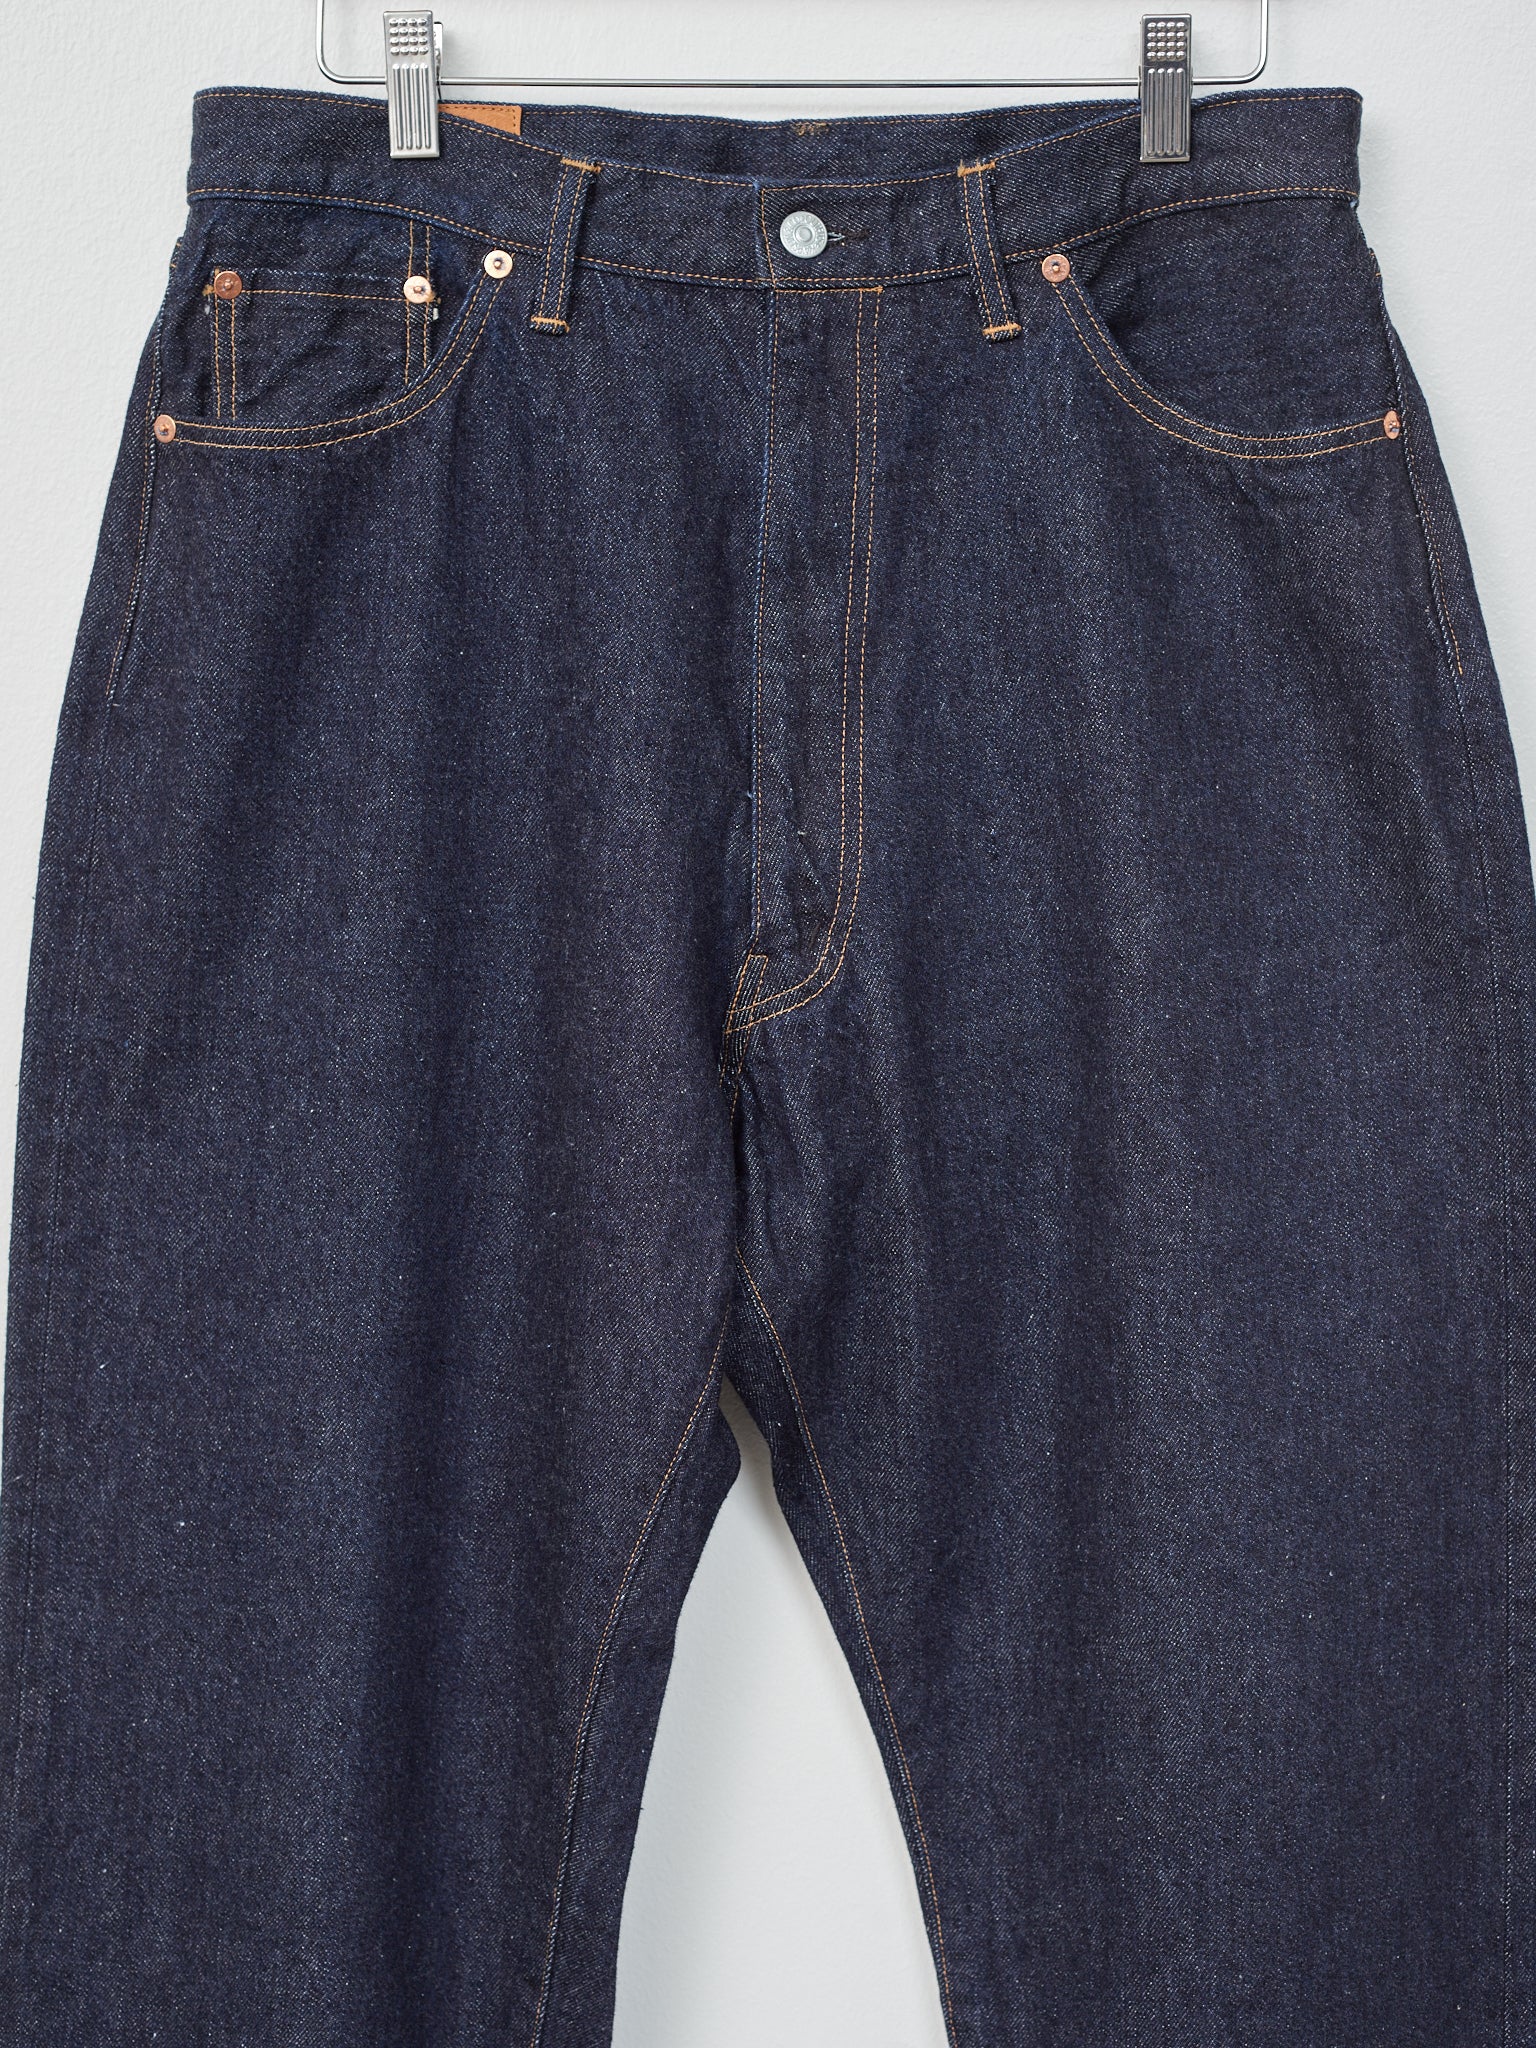 Namu Shop - Kaptain Sunshine 5P Zipper Front Denim Pants - Indigo One Wash